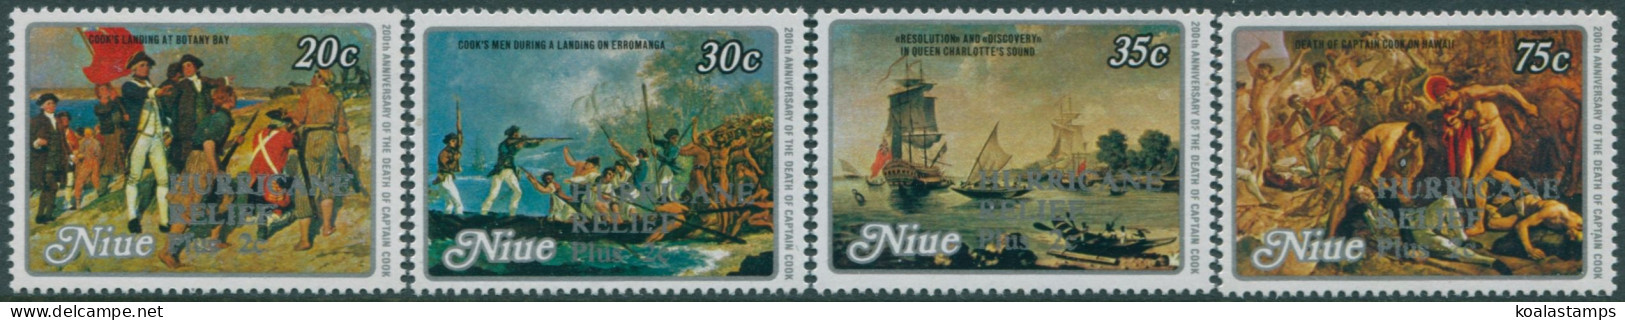 Niue 1980 SG320-323 Captain Cook's Death Hurricane Relief Set MLH - Niue